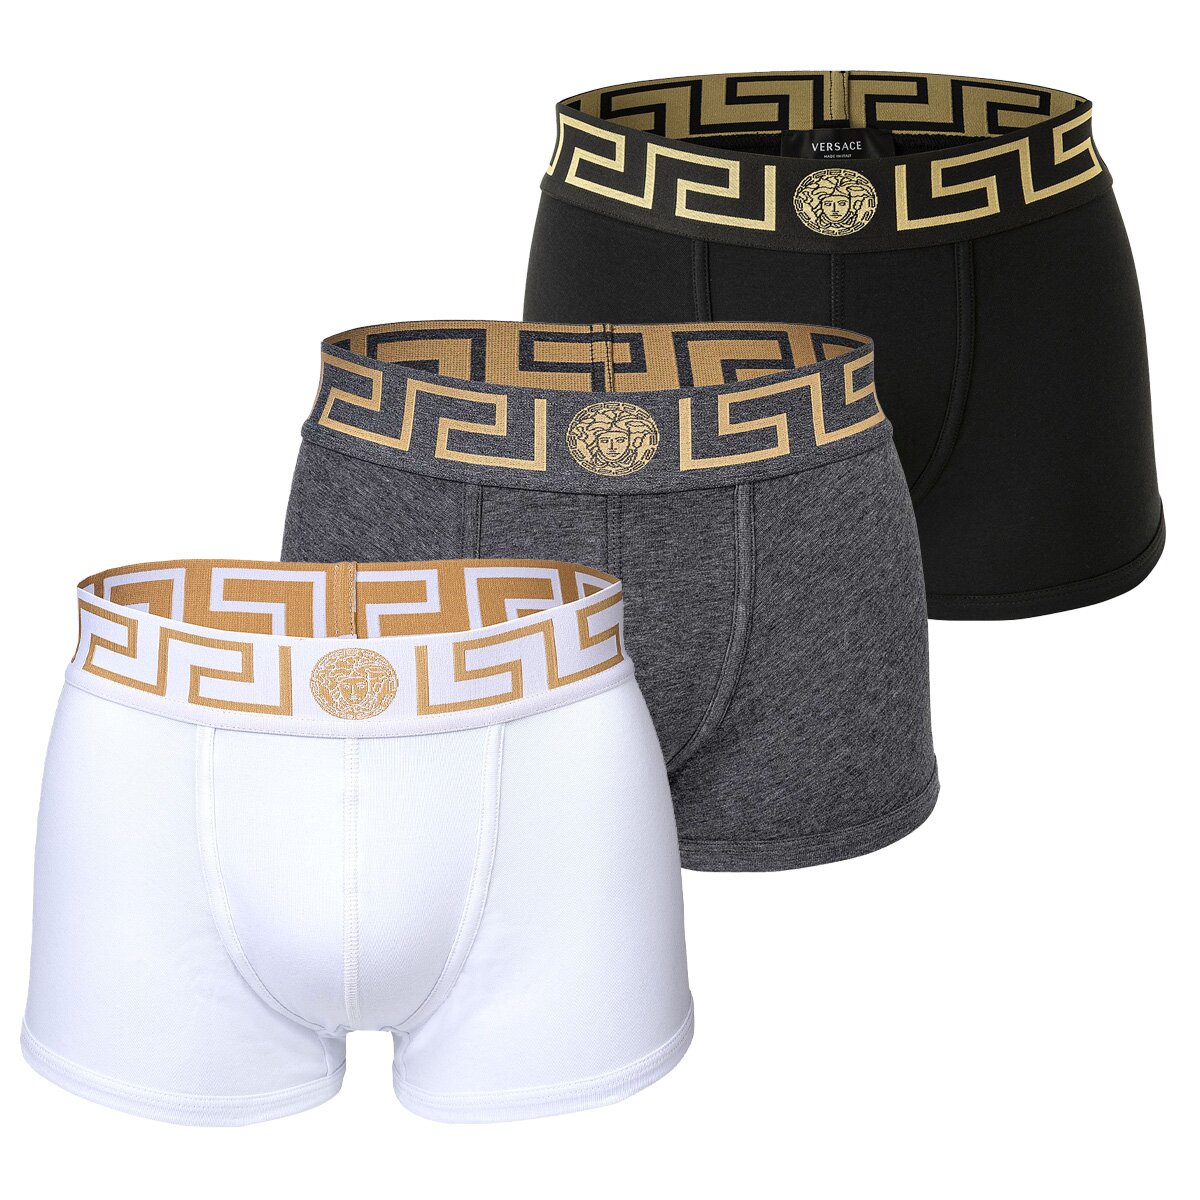 VERSACE Men's Boxer Shorts, 3-Pack - TOPEKA, Cotton, solid color, 154,95 €